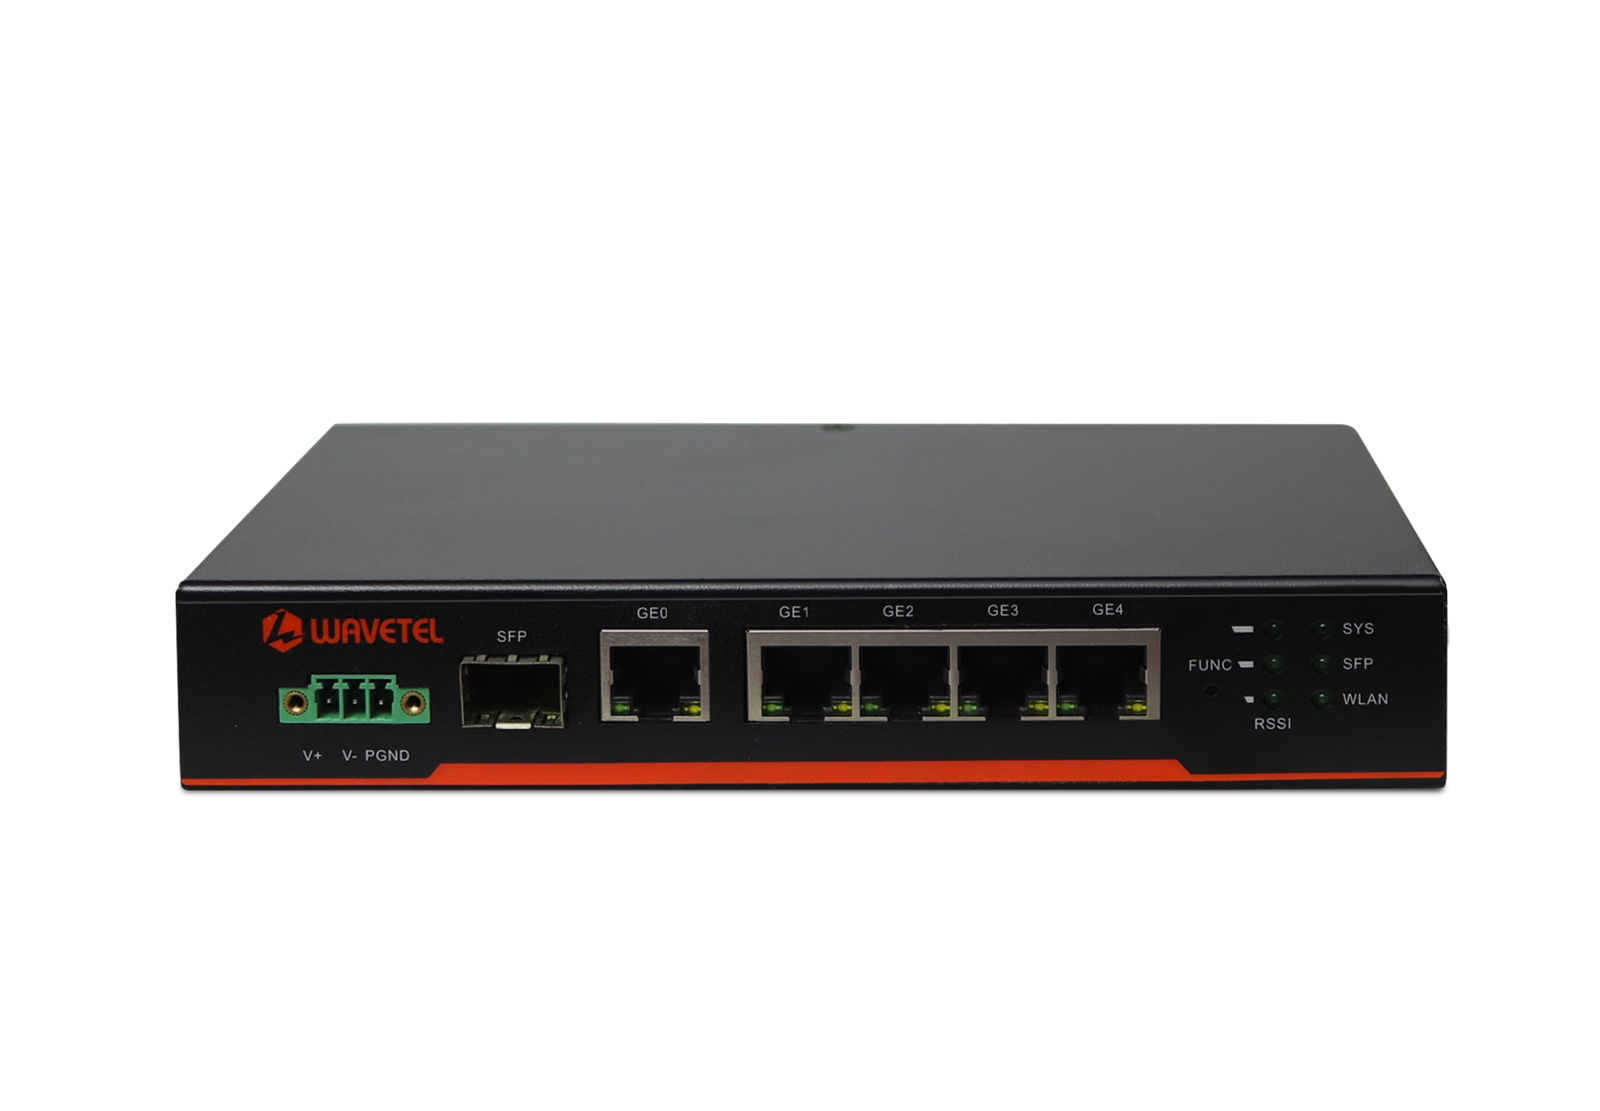 A Load Balance Router It offers 5 Gigabit Ethernet interfaces and 1Gigabit SFP fiber